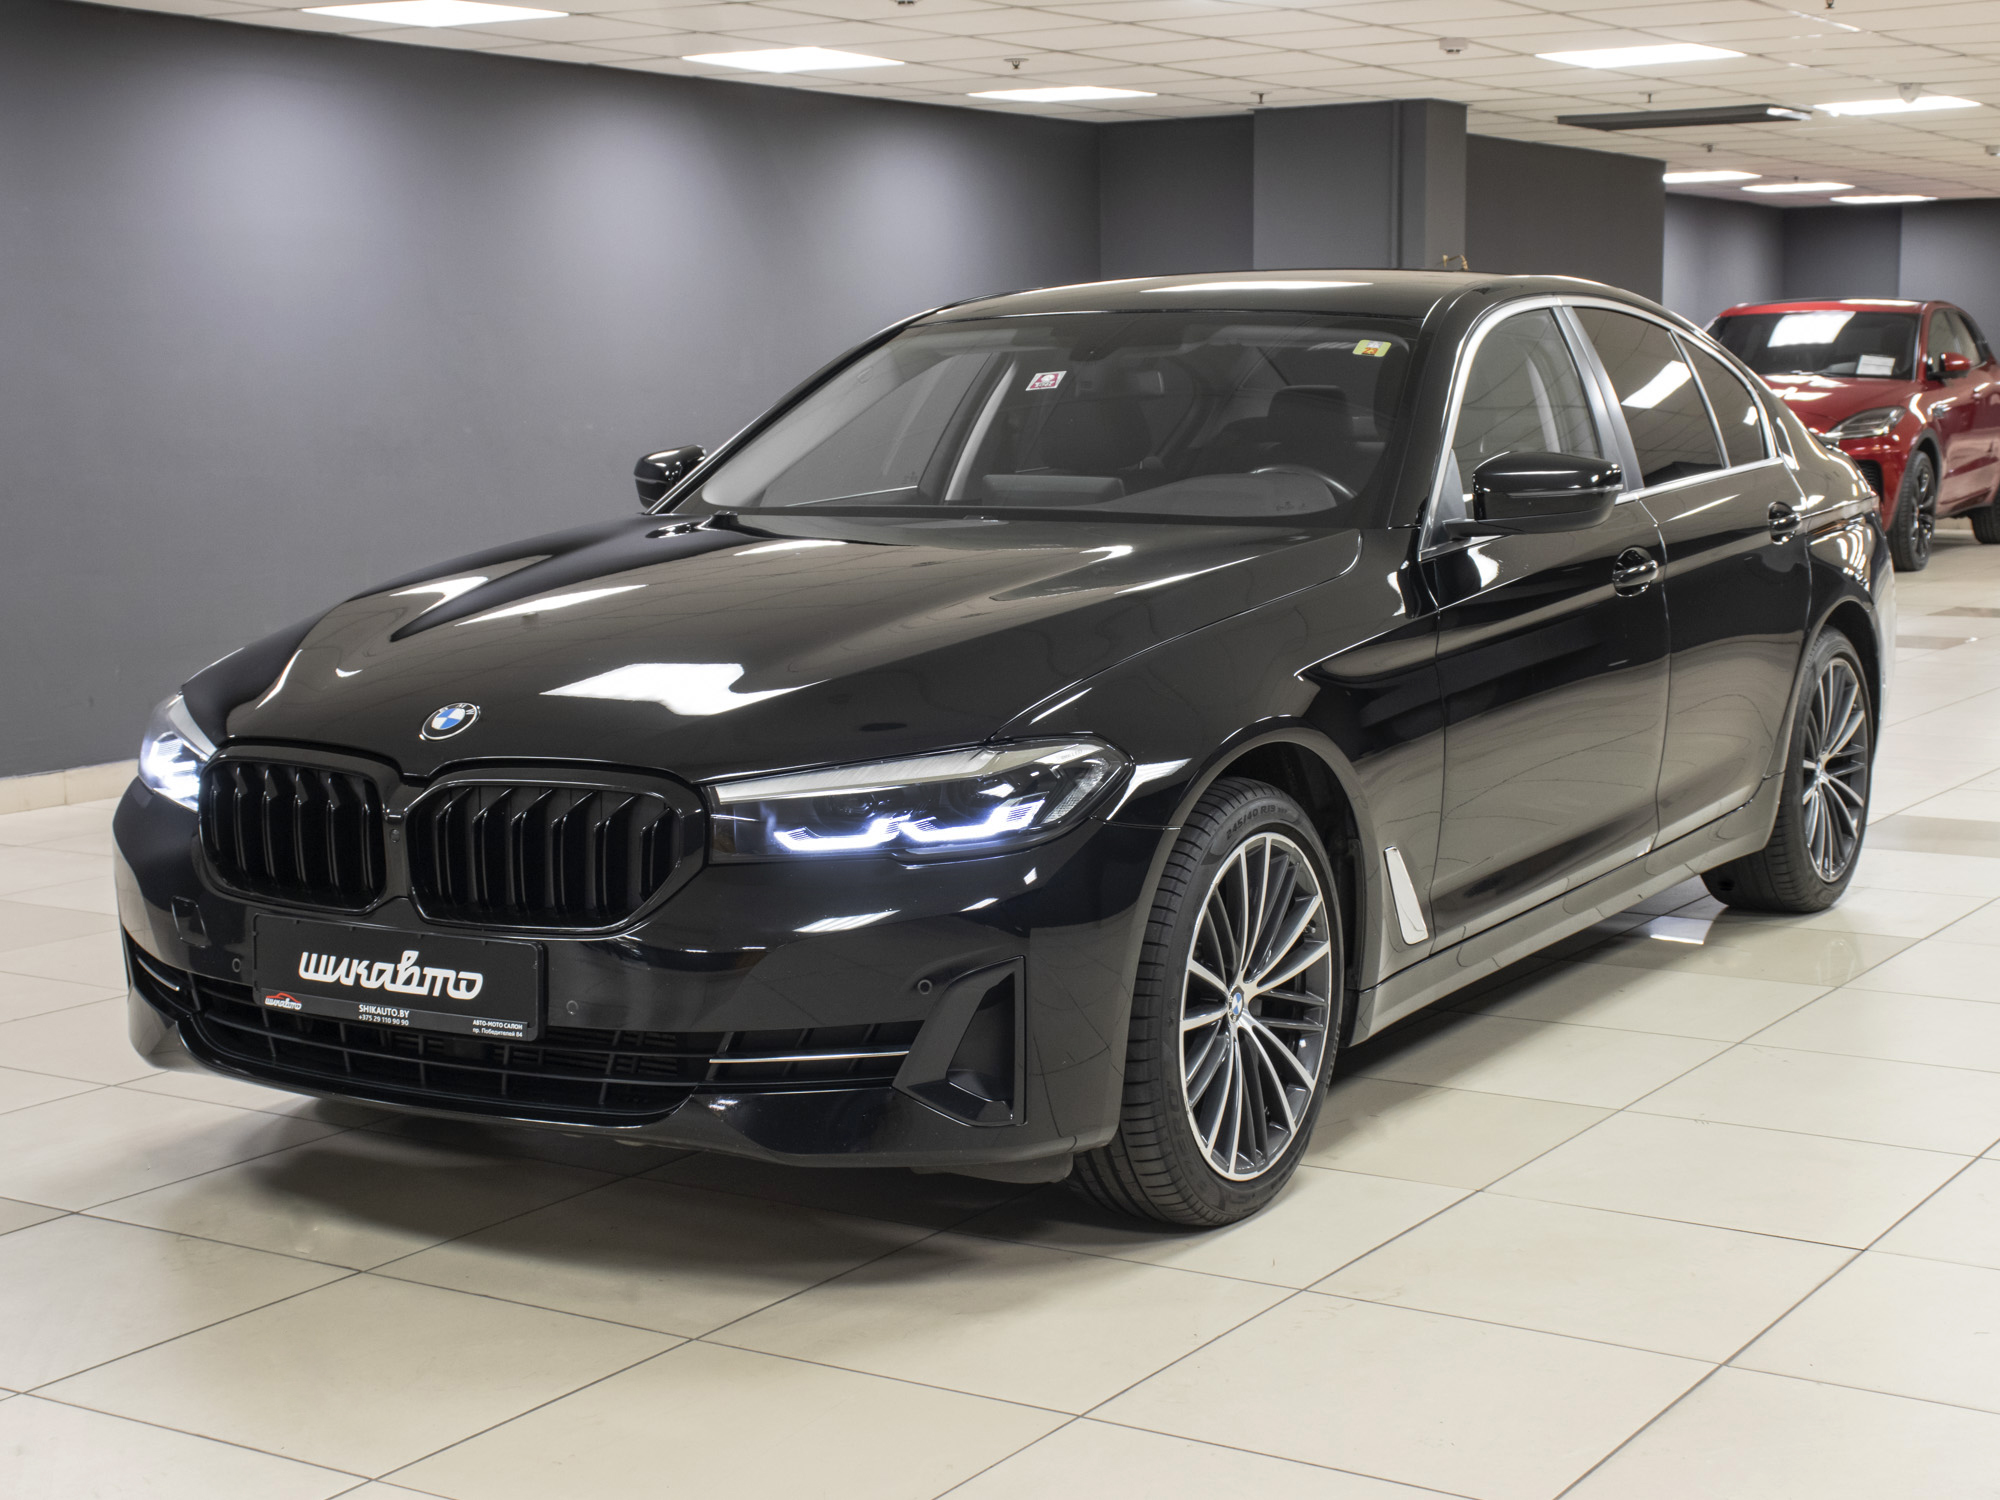   BMW 5 series 520i 2021   